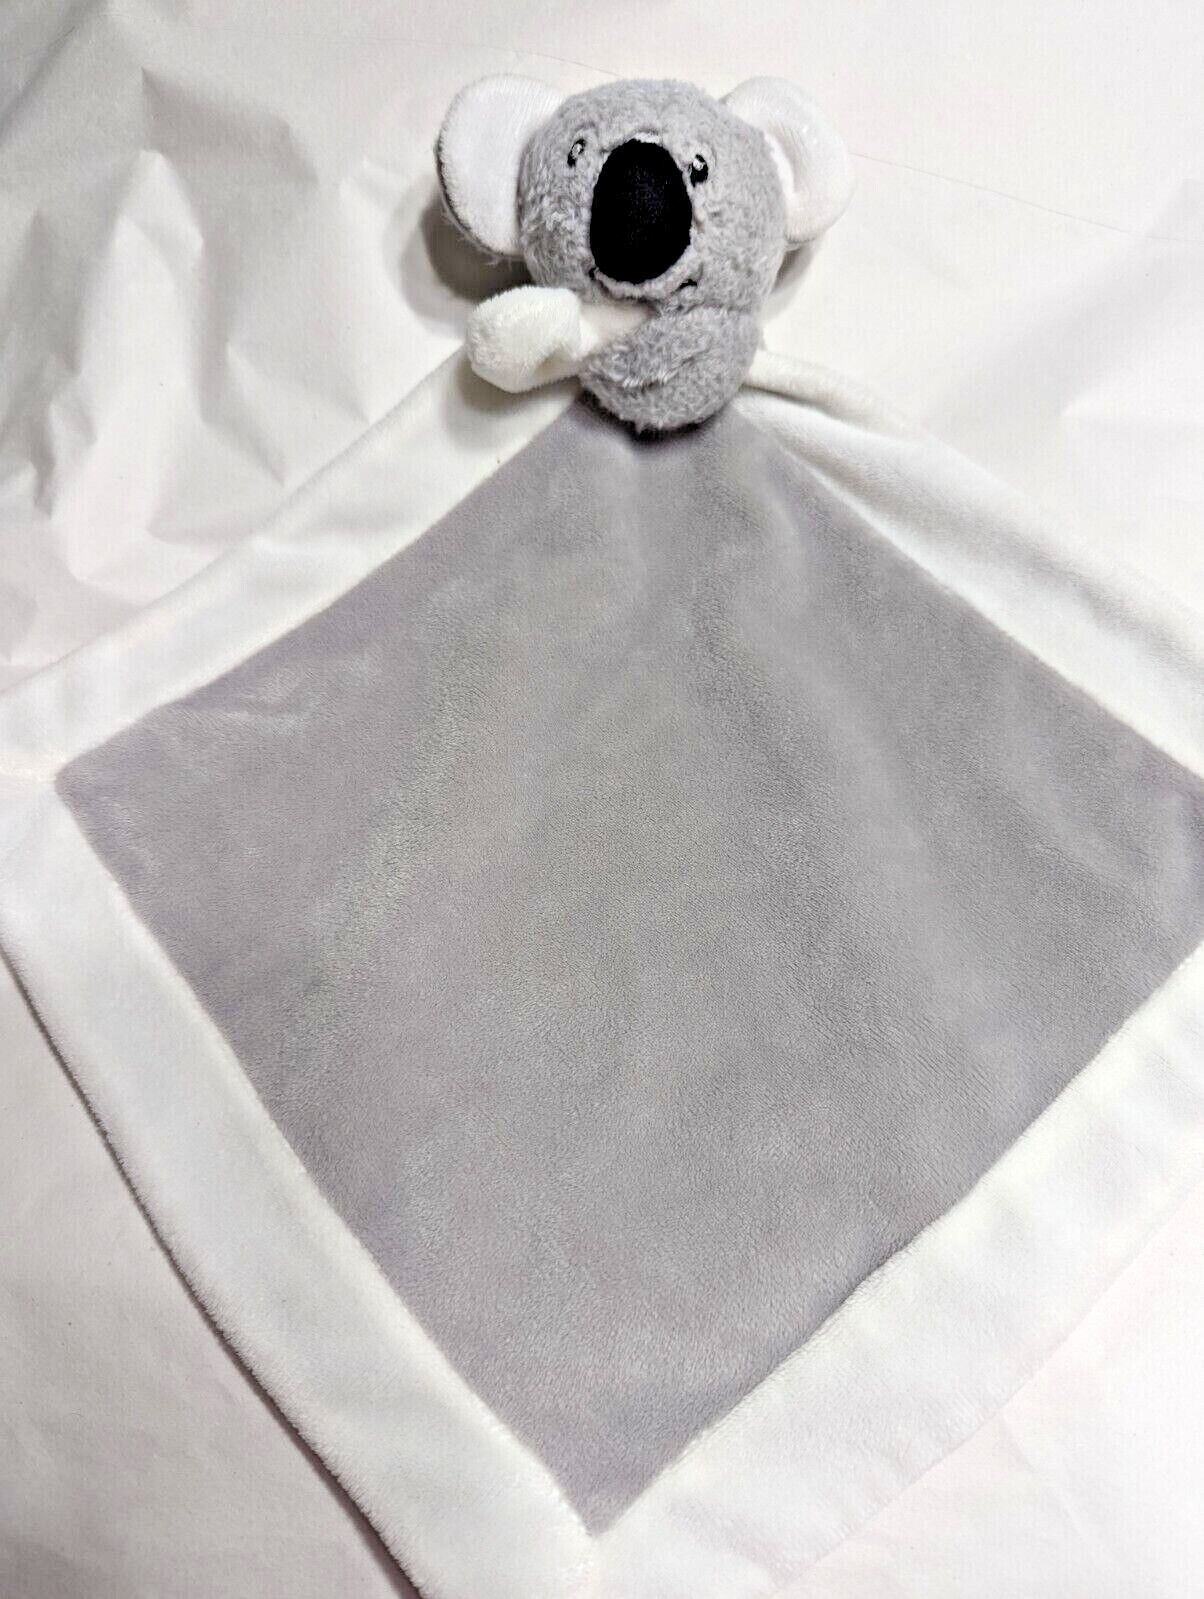 Huggable Friends small gray white koala plush baby security blanket lovey rattle - $29.69